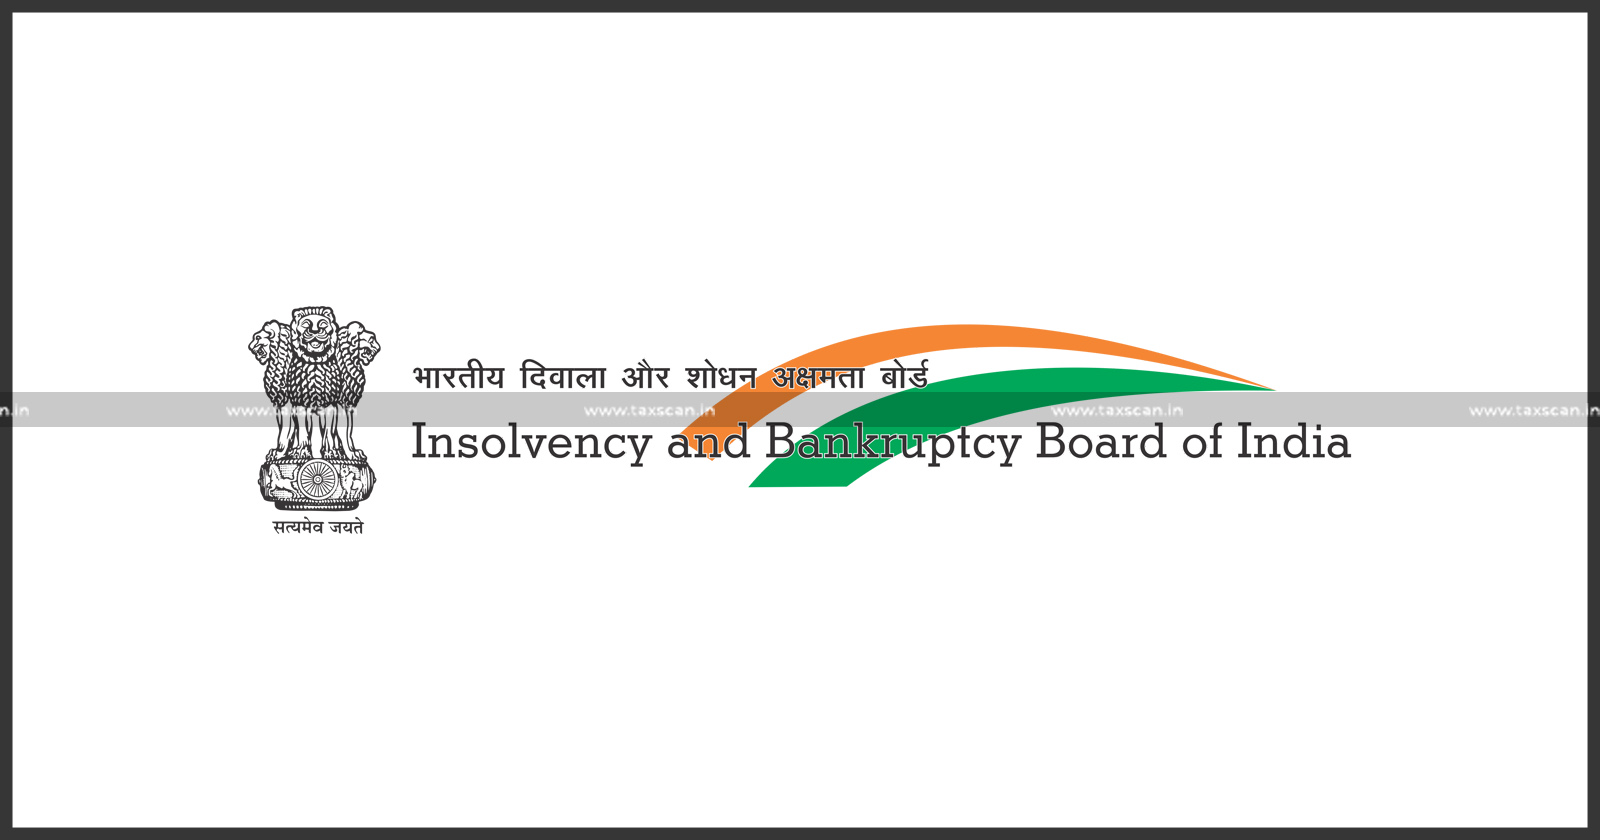 Non-Counting Votes - CoC - CoC Members - Union Bank of India - Bajaj Finserv - IBBI suspends IP - IBBI - Taxscan